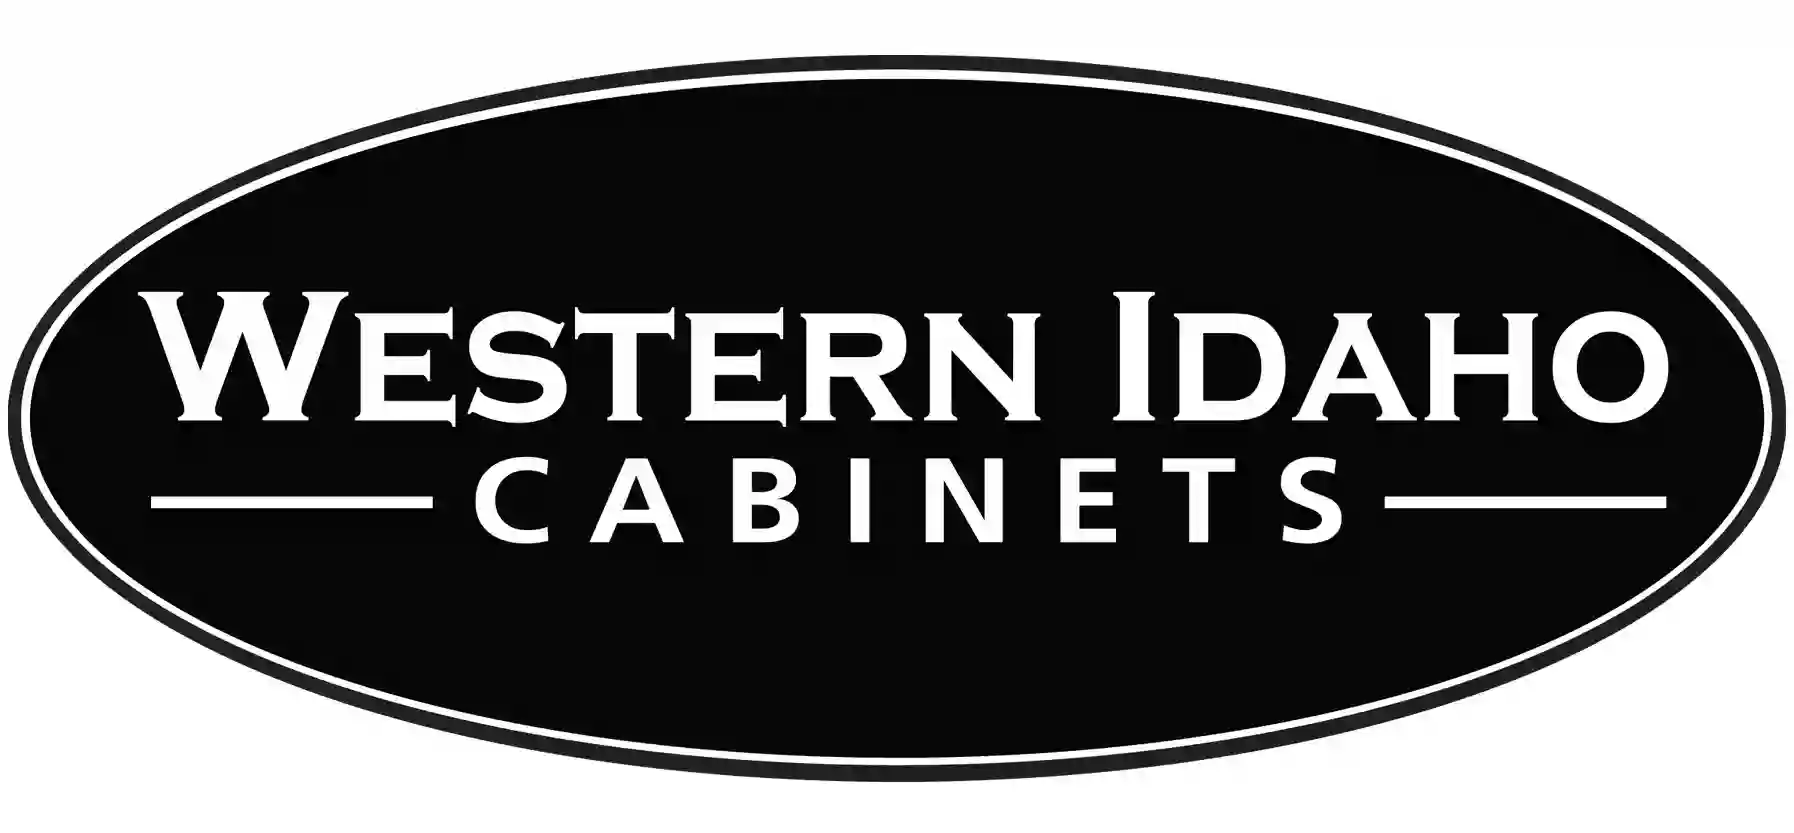 Western Idaho Cabinets